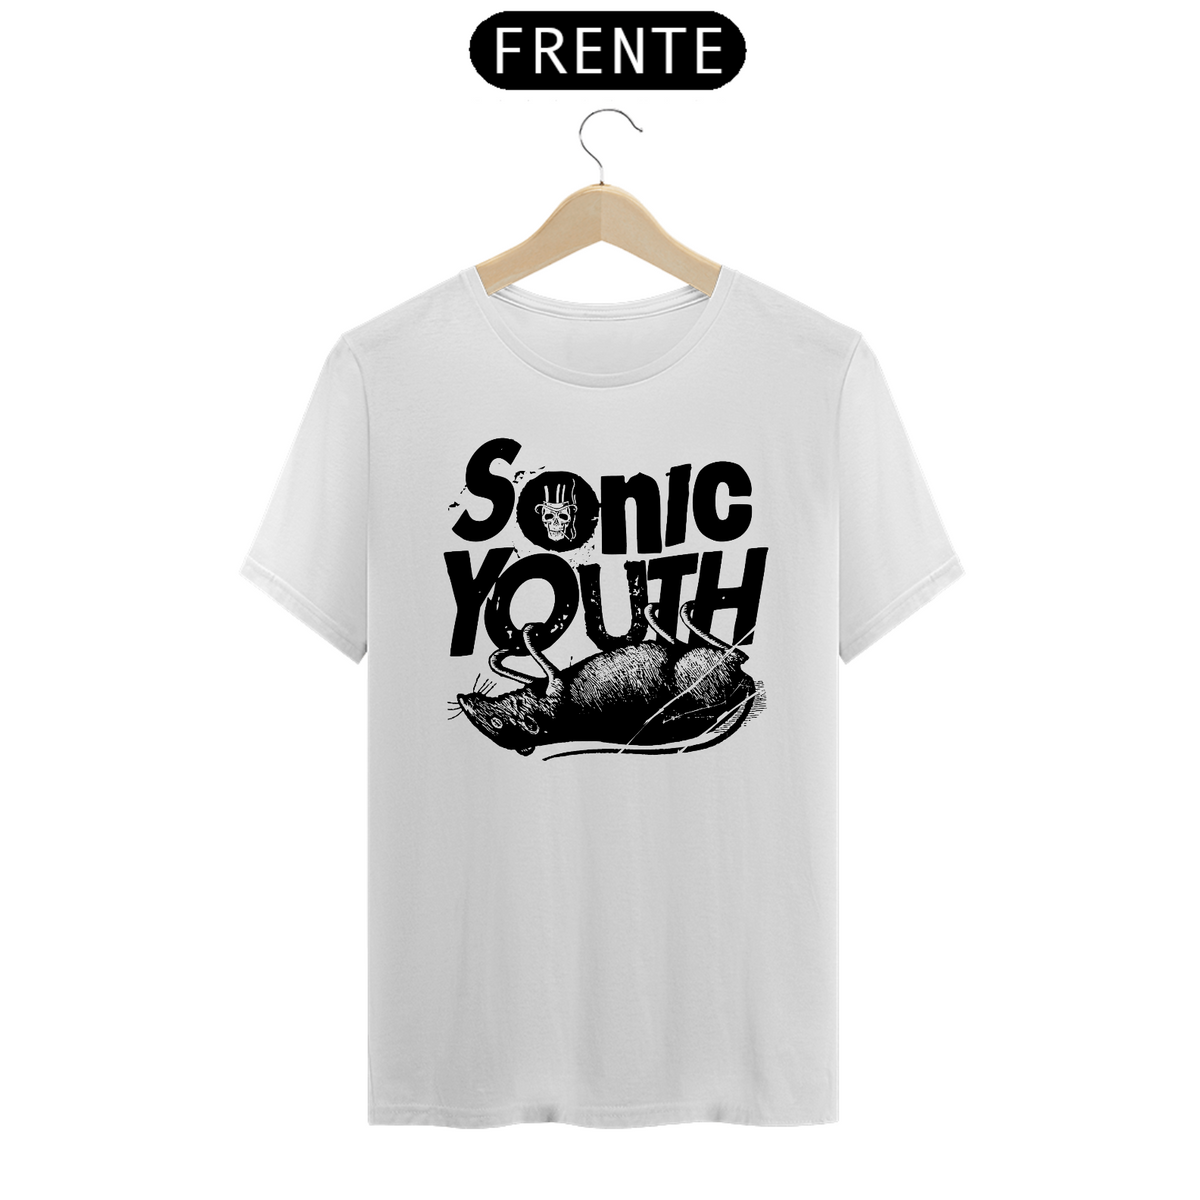 Nome do produto: Sonic Youth